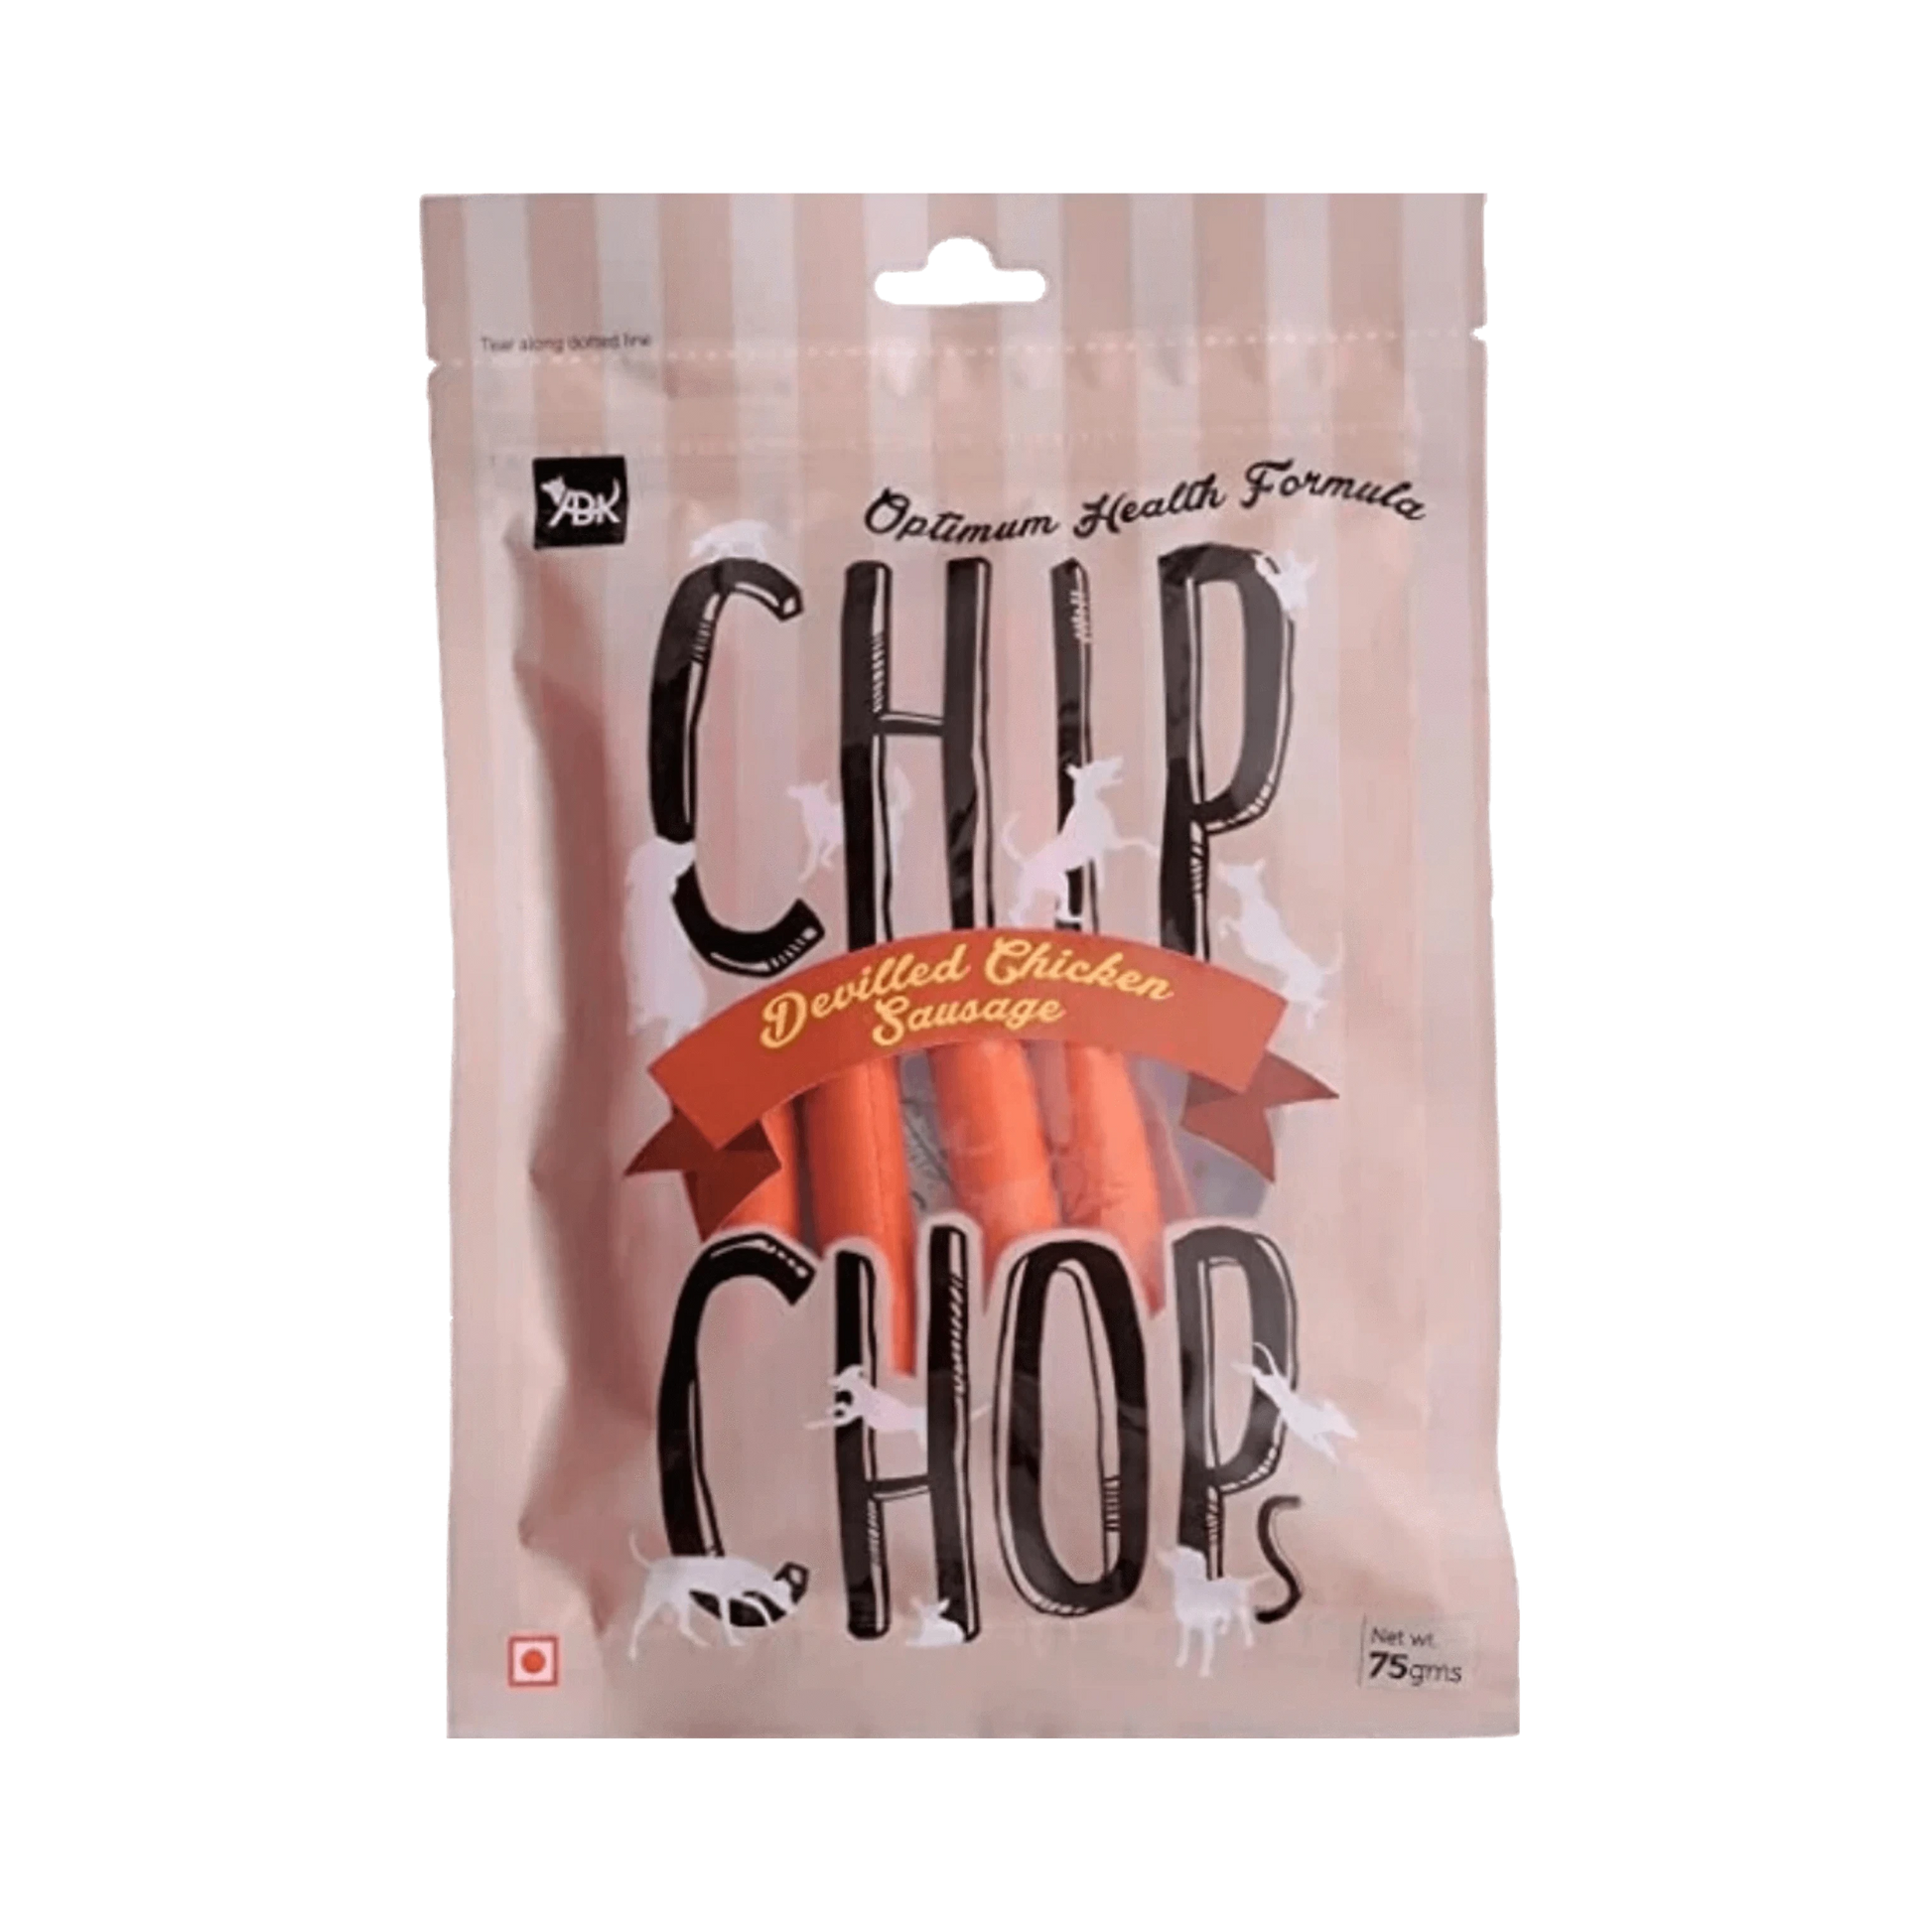 CHIP CHOP CHIC & SAUSAGE 70GM